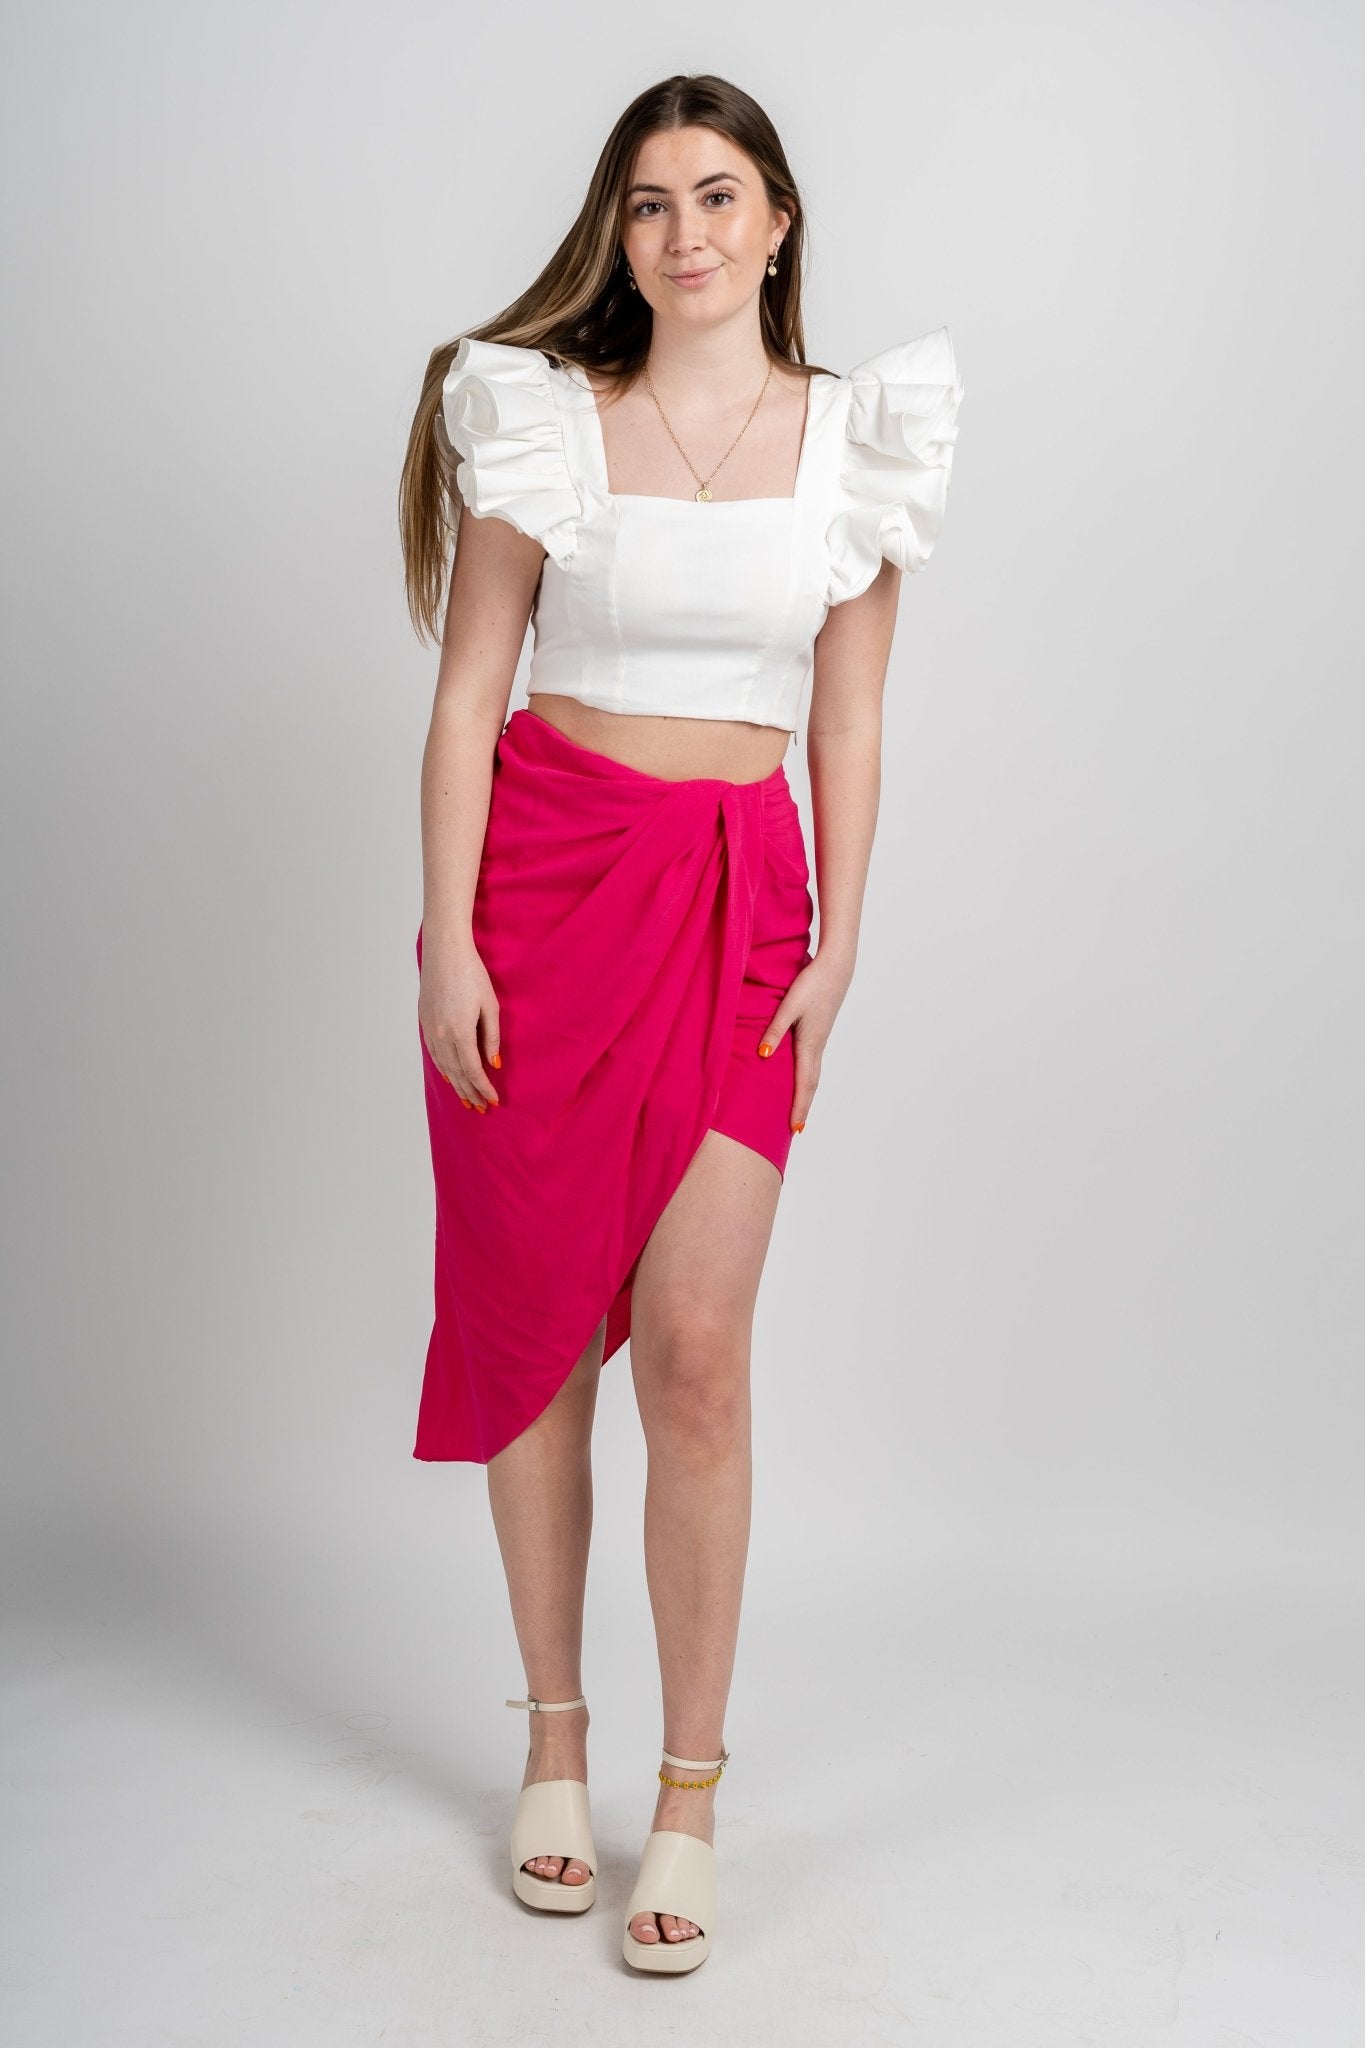 Wrap midi skirt hot pink | Lush Fashion Lounge: boutique fashion skirts, affordable boutique skirts, cute affordable skirts